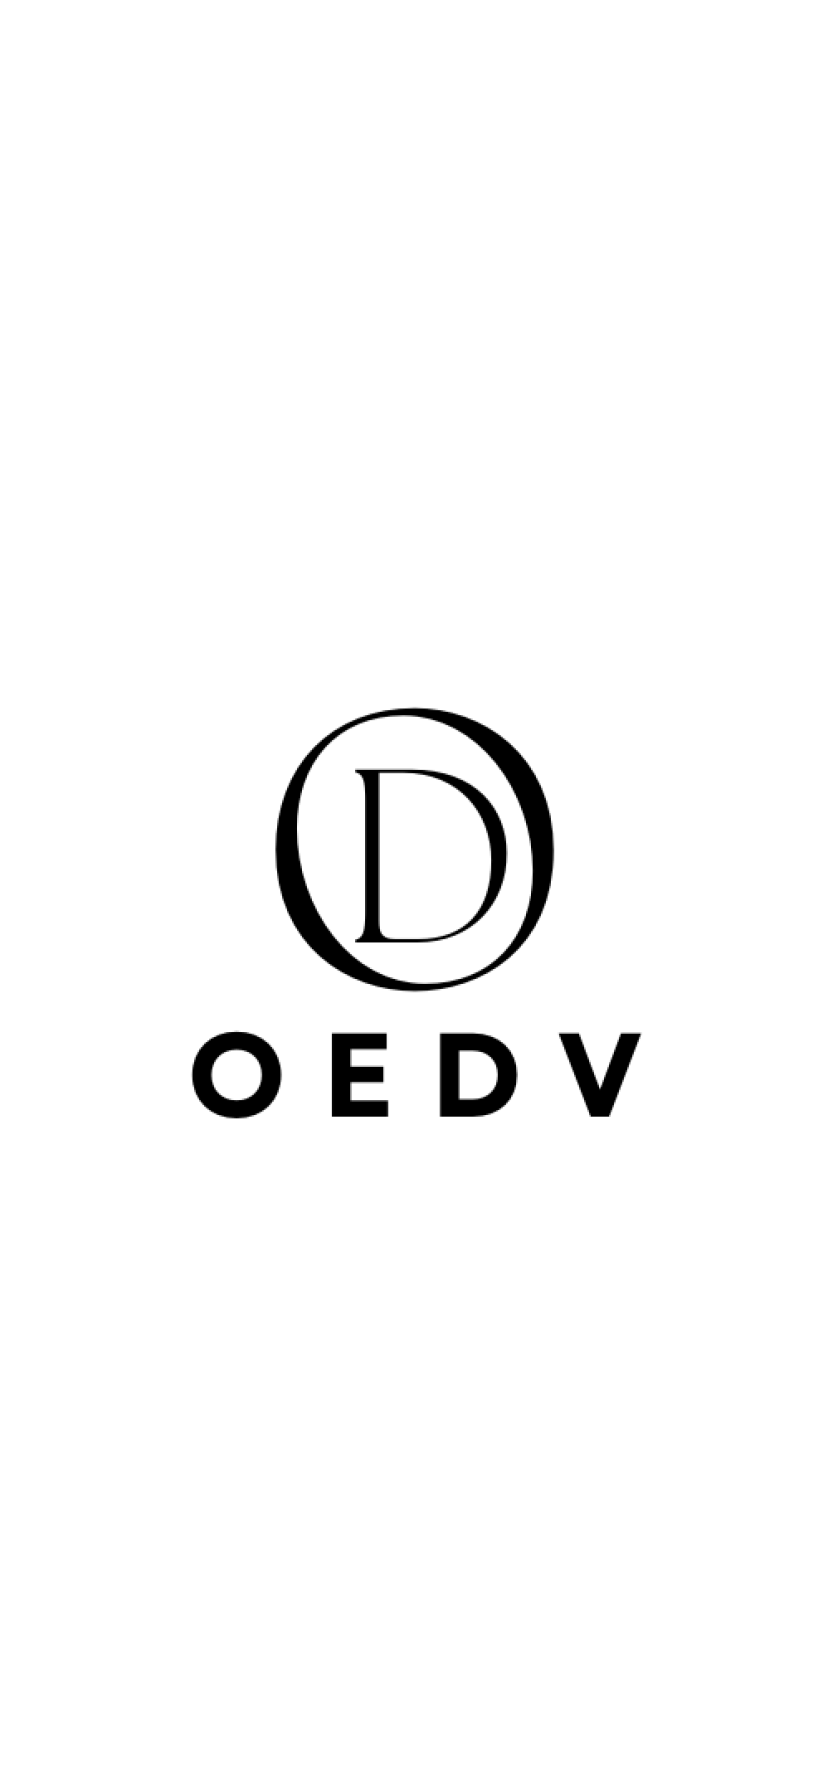 Oedv.com Domain Name For Sale